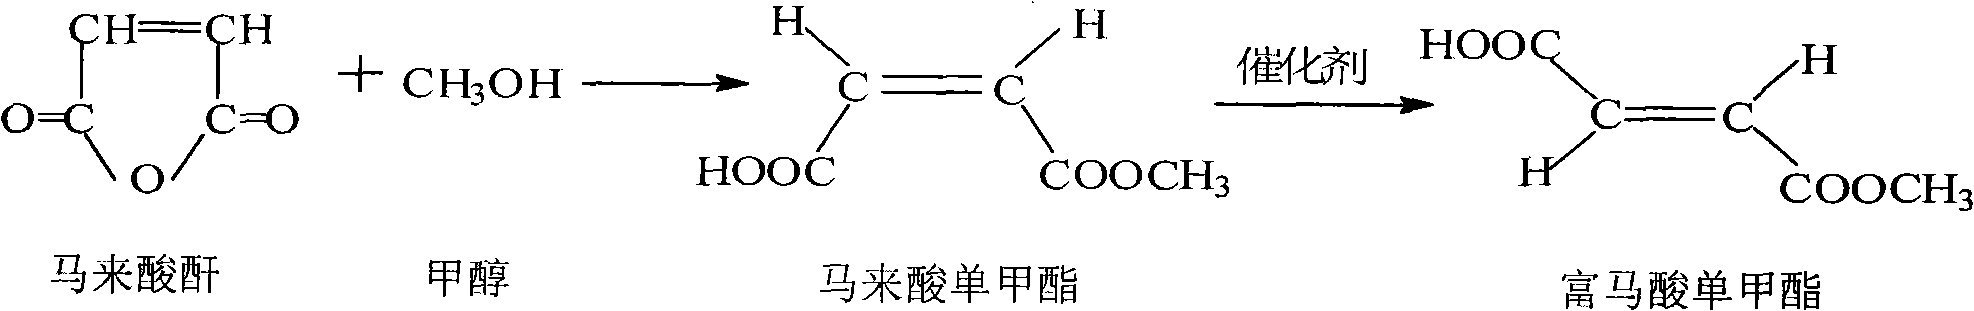 Preparation method of monomethyl fumarate